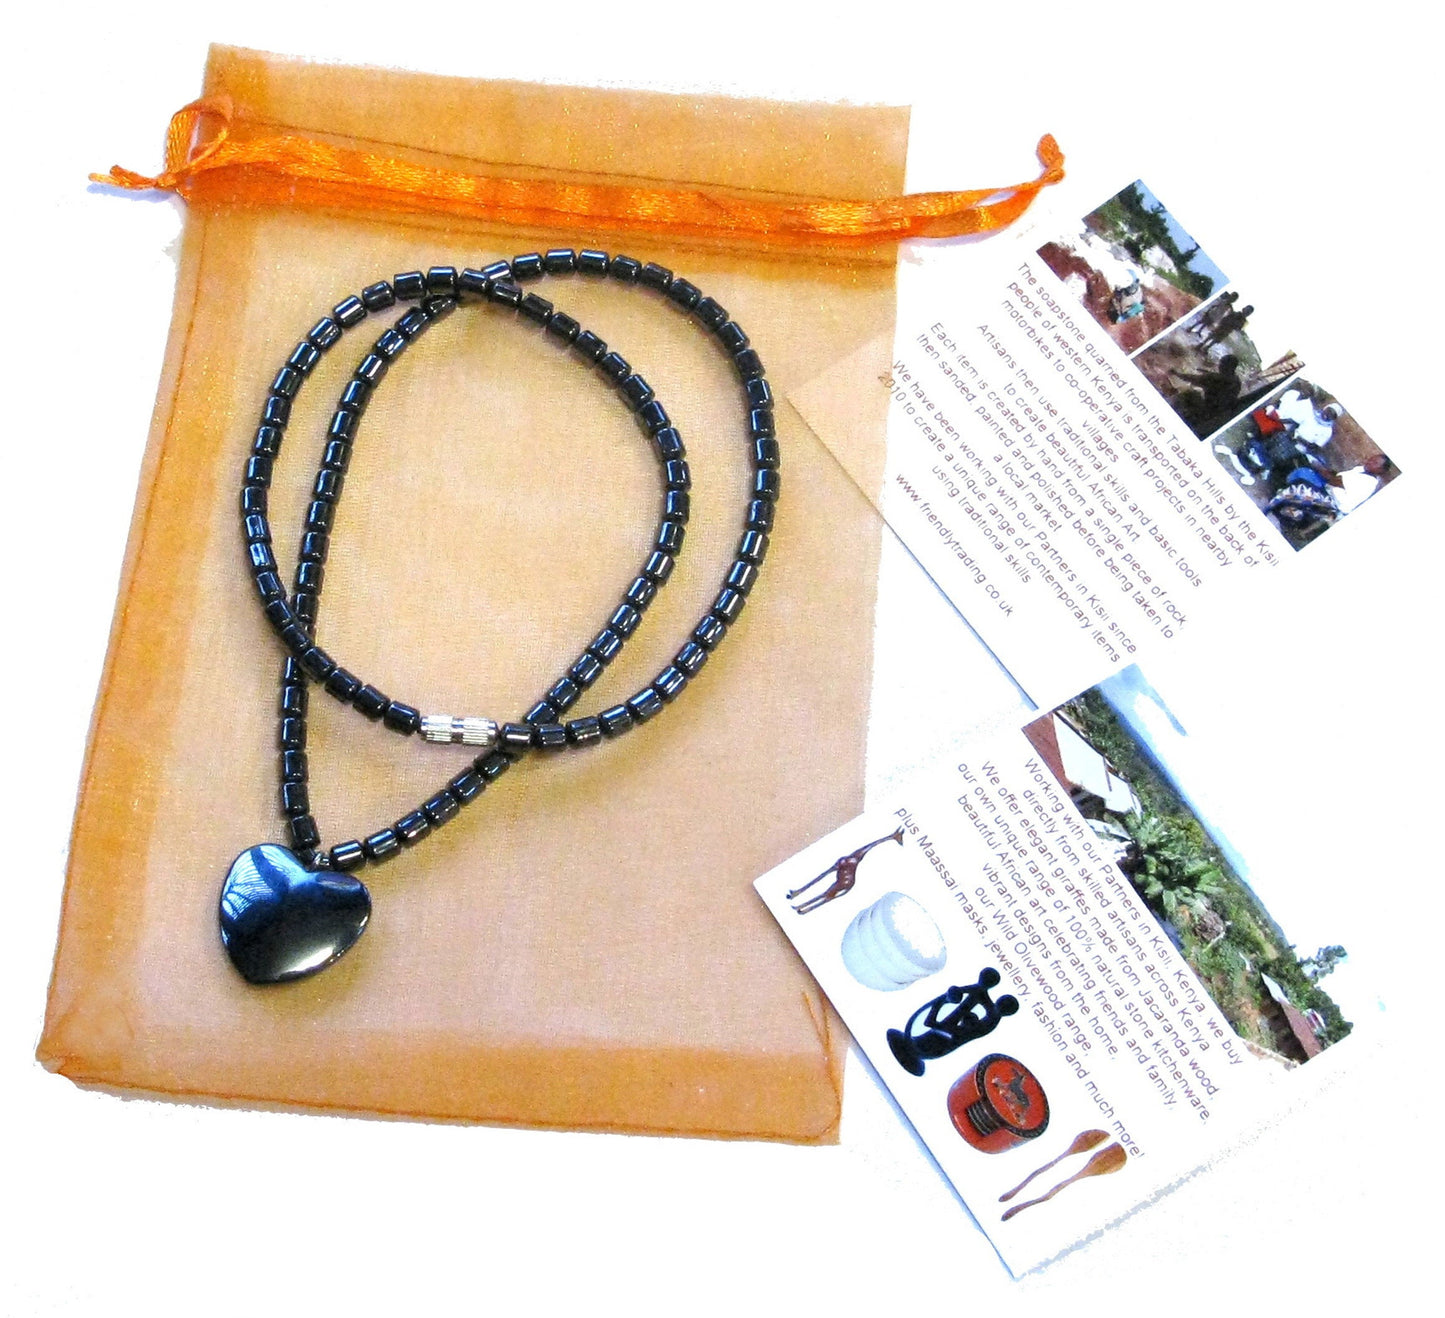 Hematite Healing Energy Anti-Stress Necklace 18" / 45 cm Turtle Pendant Handmade + Presentation Pouch & Storycard